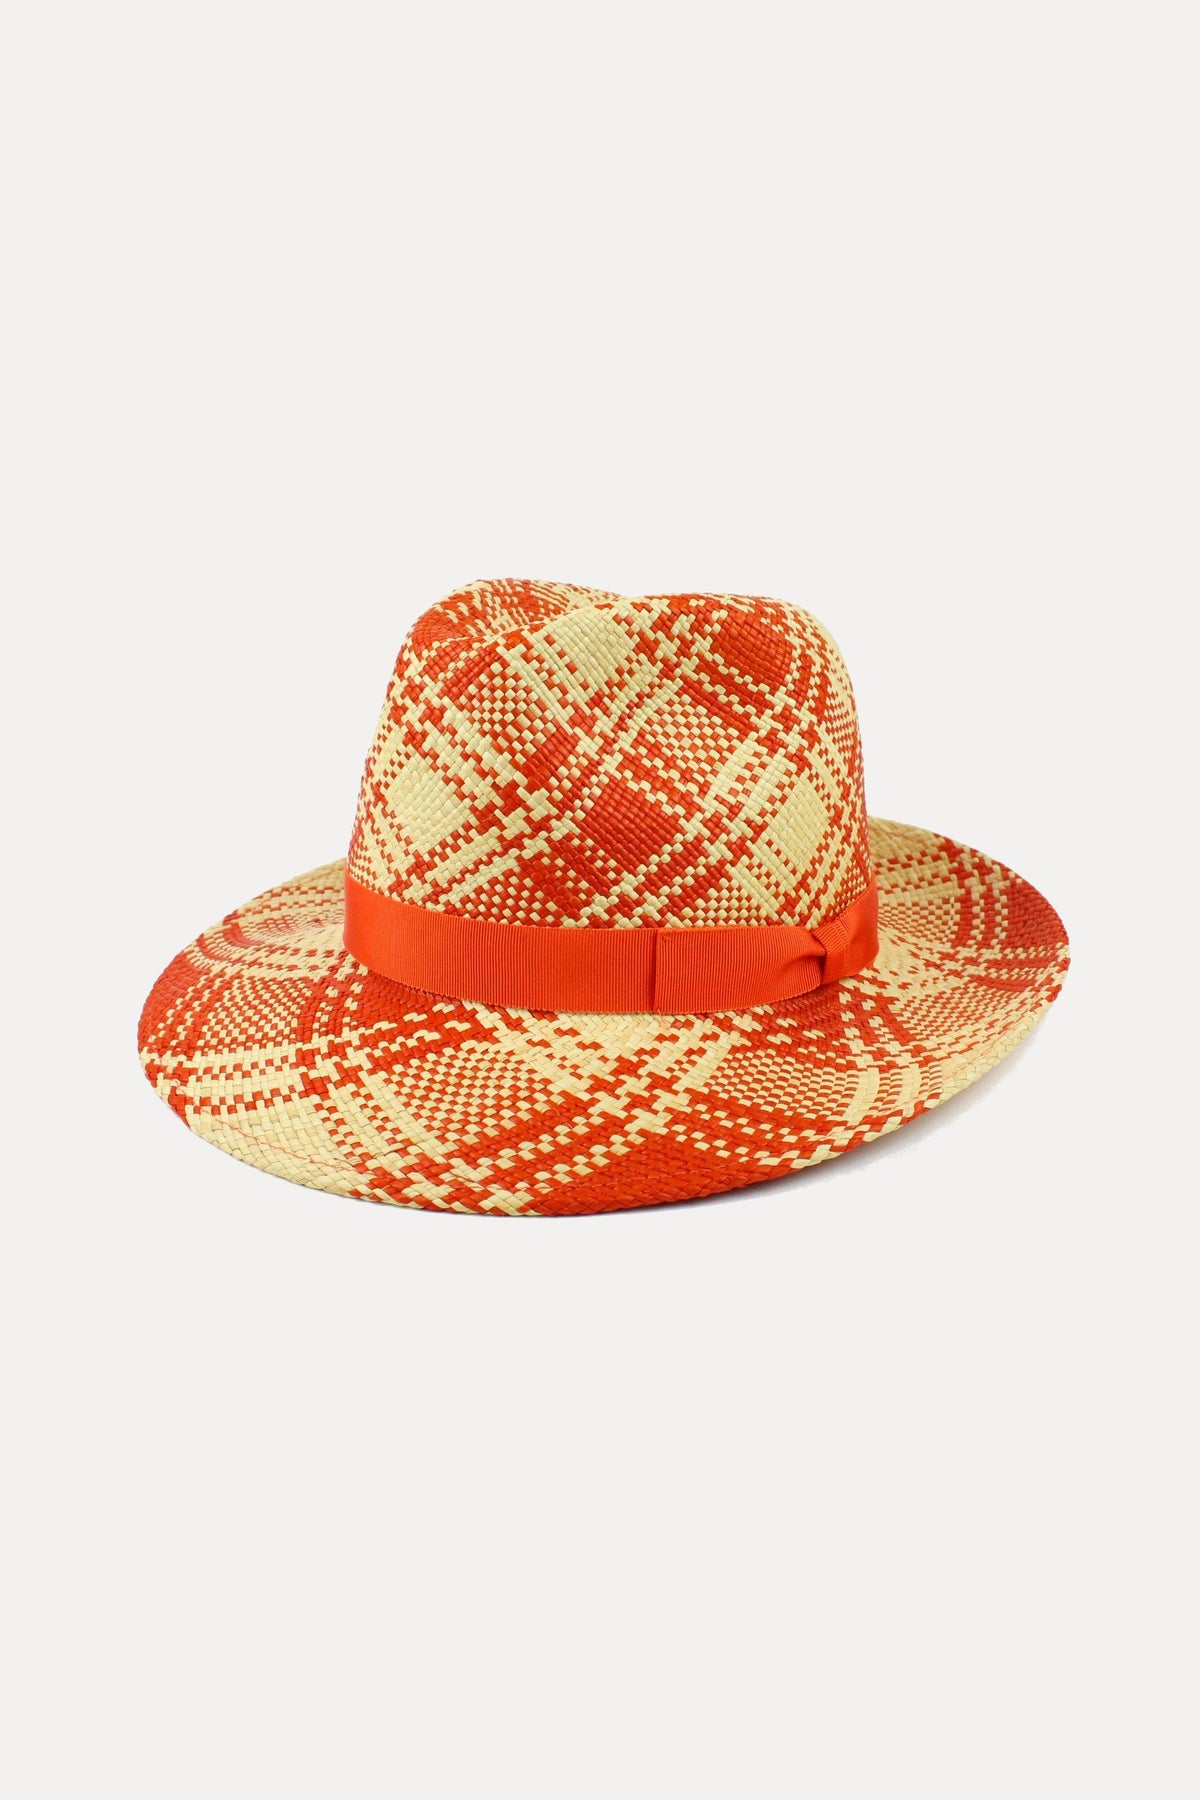 PANAMA FEDORA - SEVILLE TWIST-hats-A Child Of The Jago